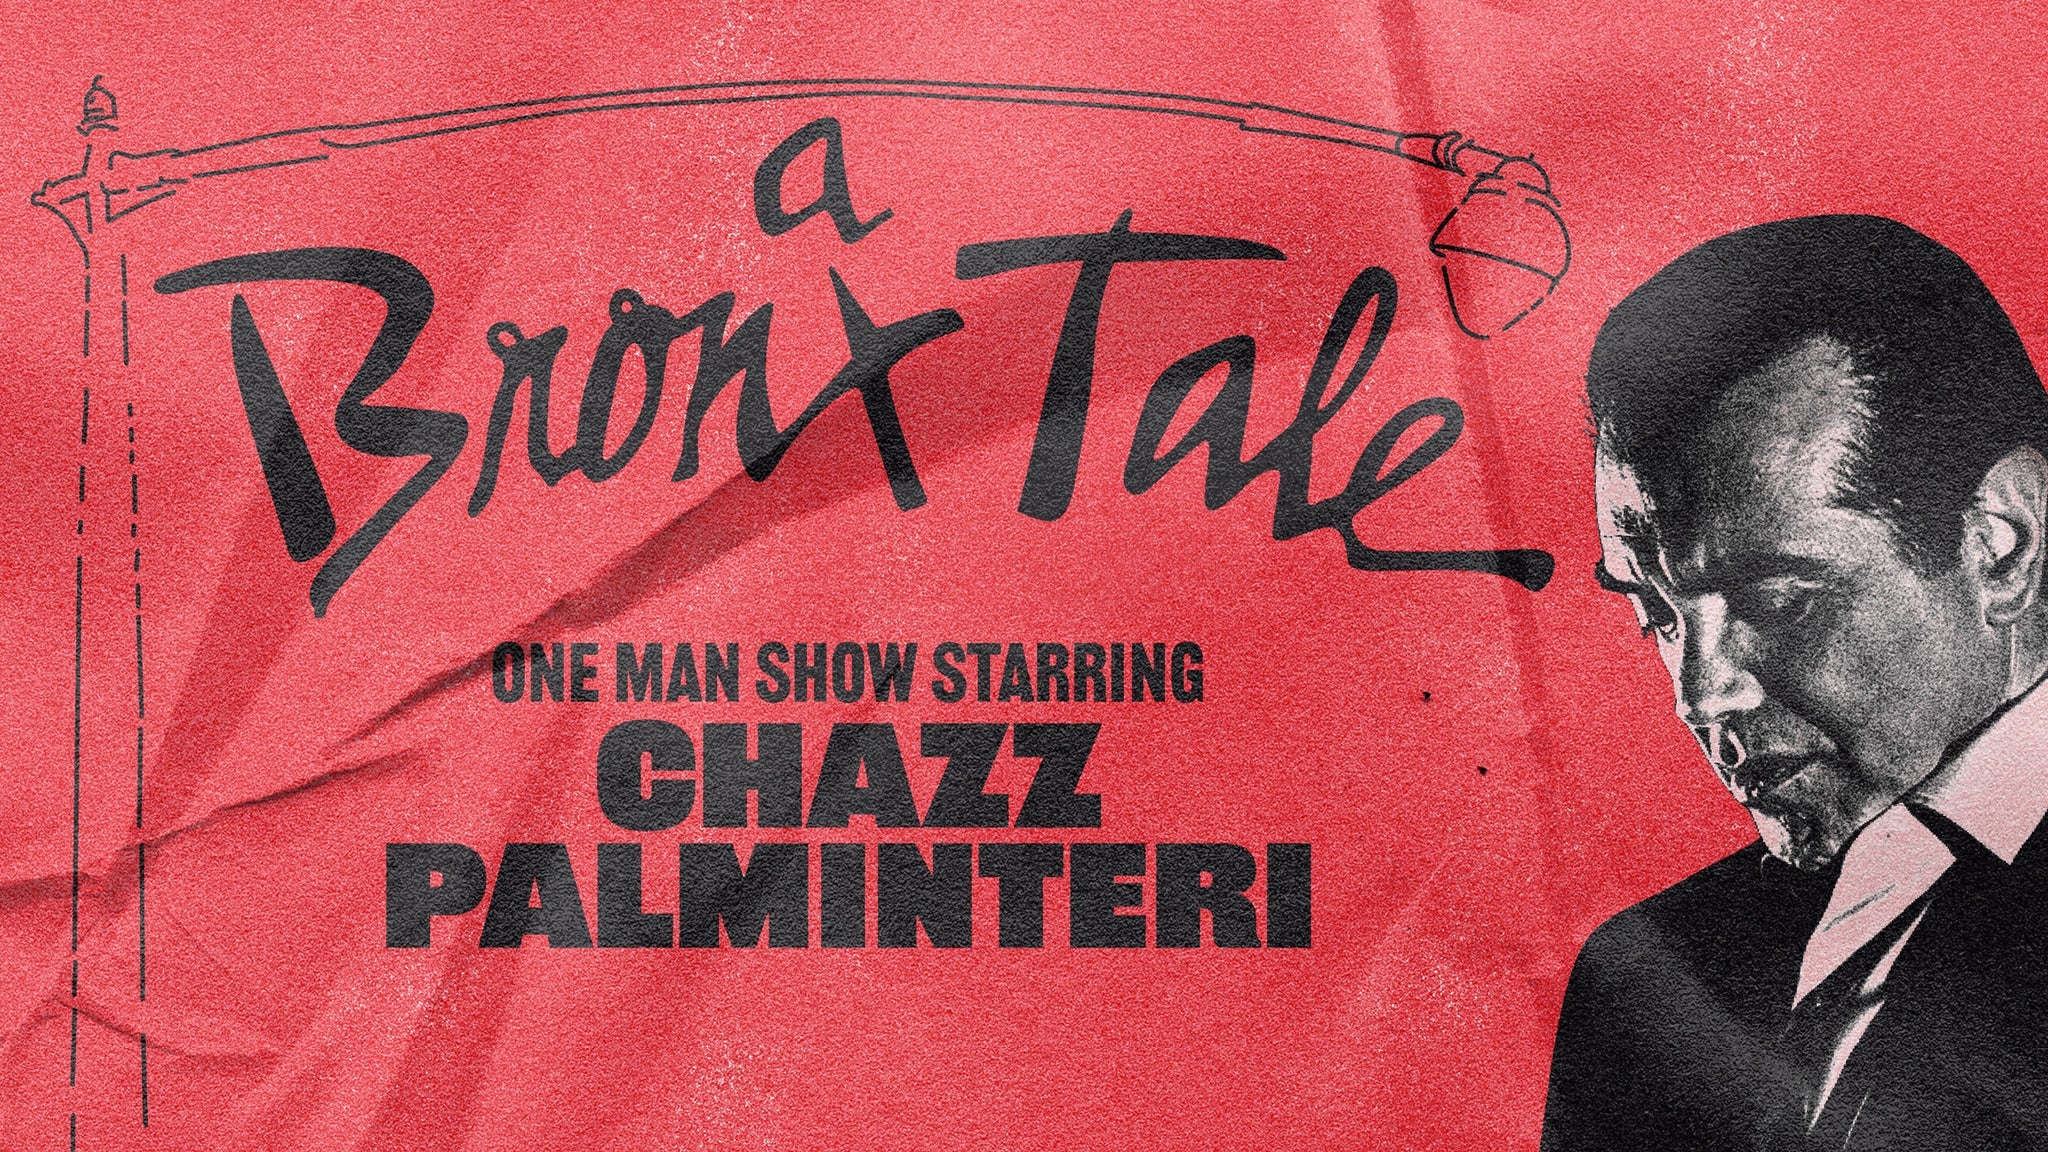 Chazz Palminteri- A Bronx Tale presale code for advance tickets in Montclair